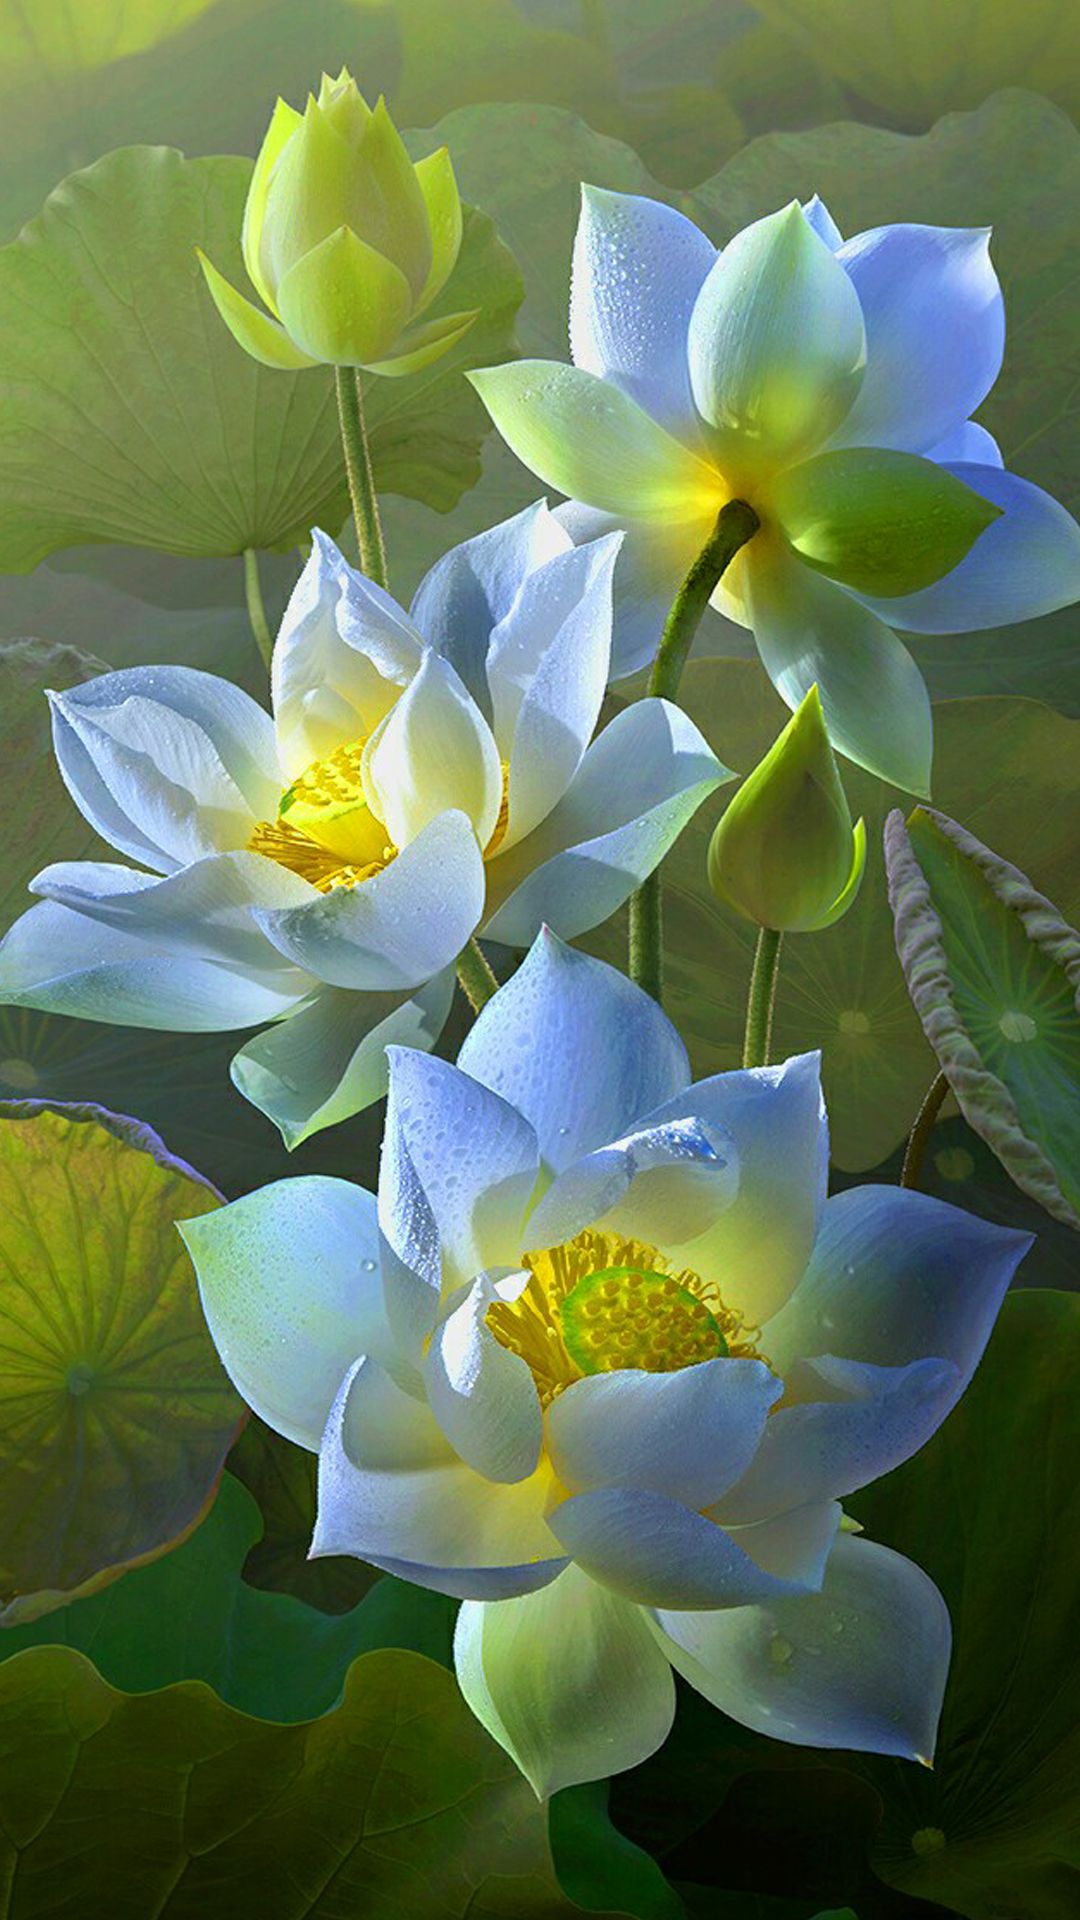 Lotus Flower Wallpaper for Samsung Galaxy Smartphones Background Wallpaper. Wallpaper Download. High Resolution Wallpaper. Lotus flower picture, Lotus flower wallpaper, Beautiful flowers picture